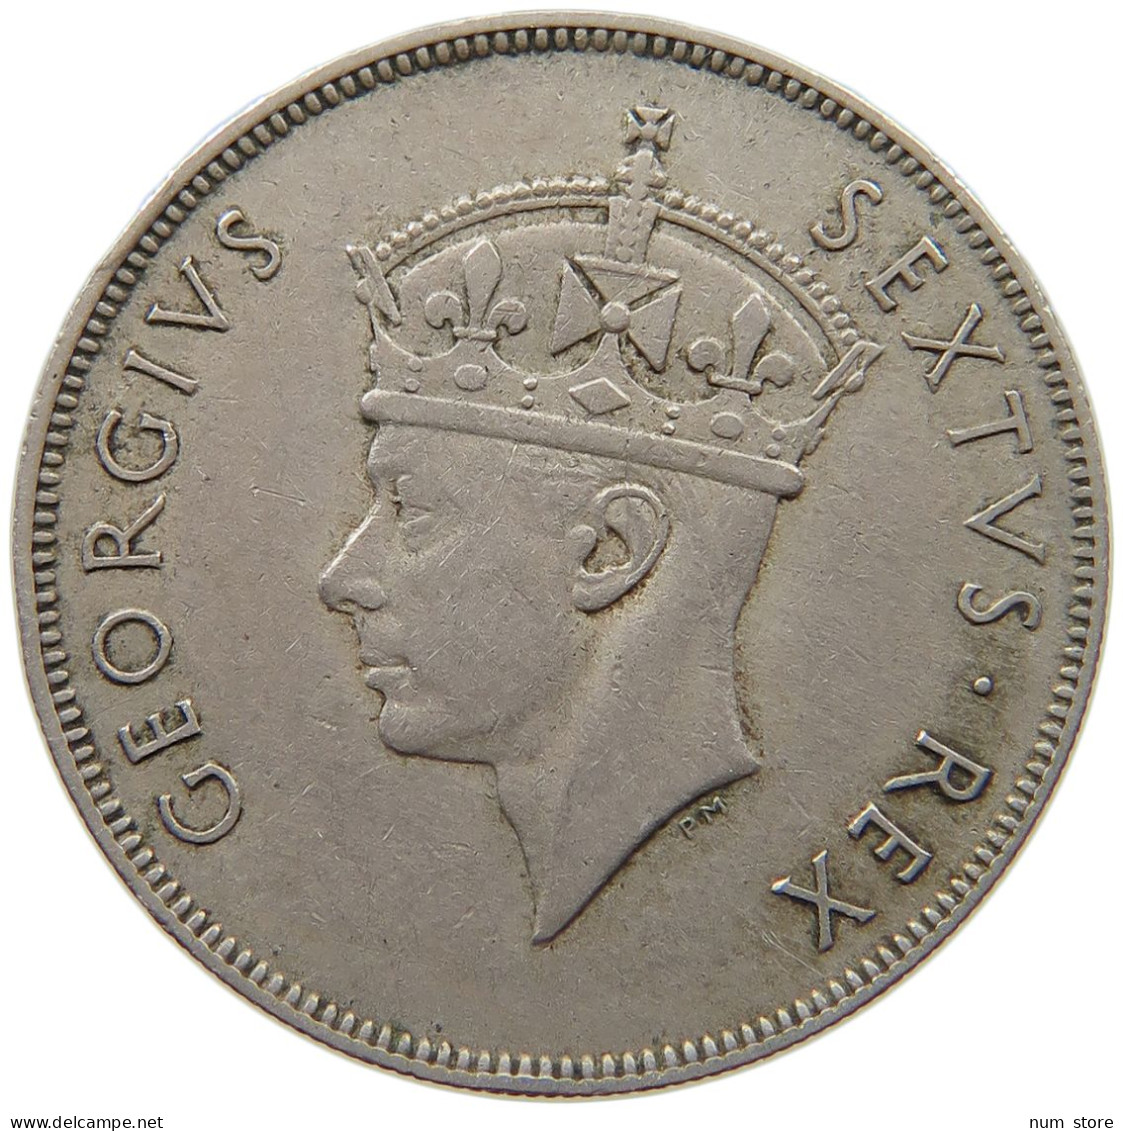 EAST AFRICA SHILLING 1949 George VI. (1936-1952) #s039 0379 - Africa Orientale E Protettorato D'Uganda